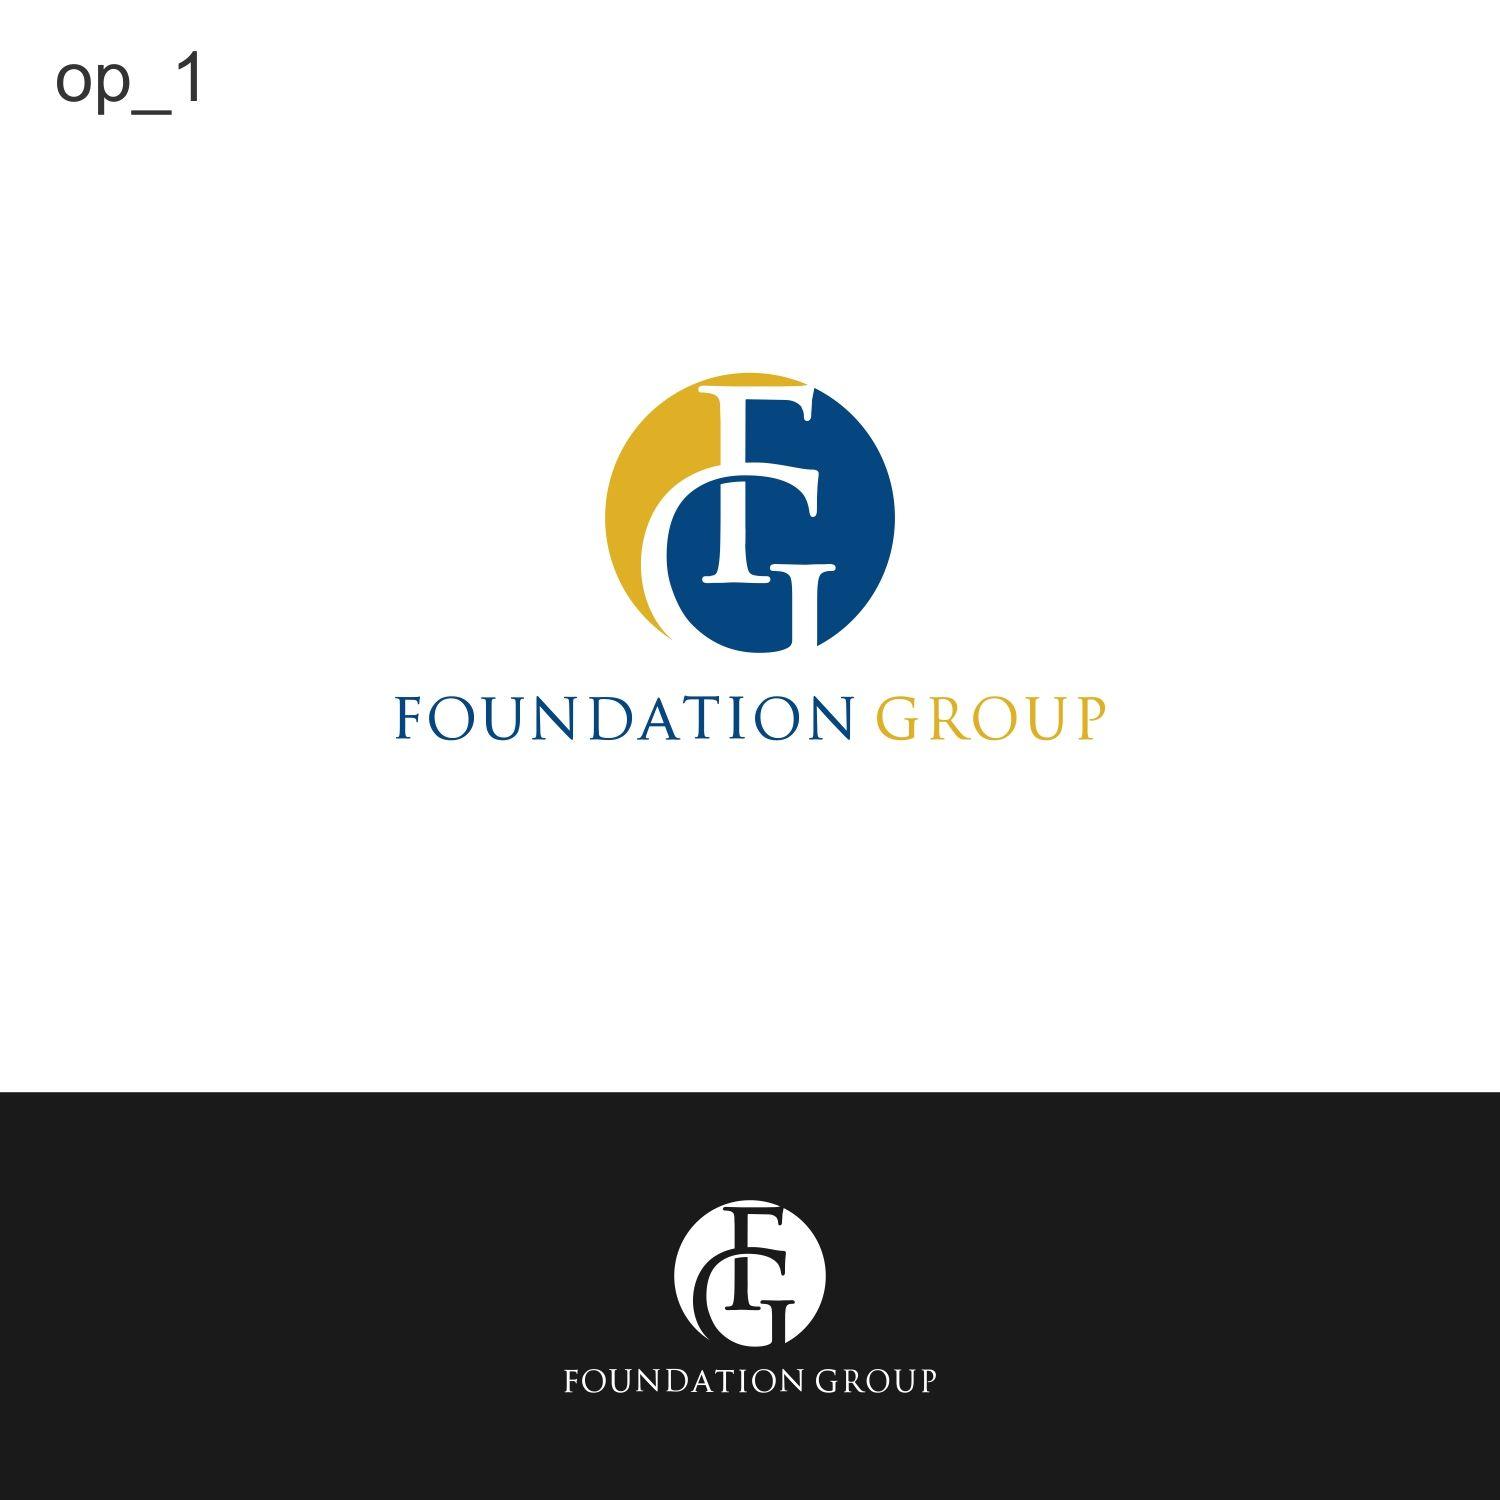 Foundation Group Logo - Professional, Upmarket, Non Profit Logo Design for Foundation Group ...